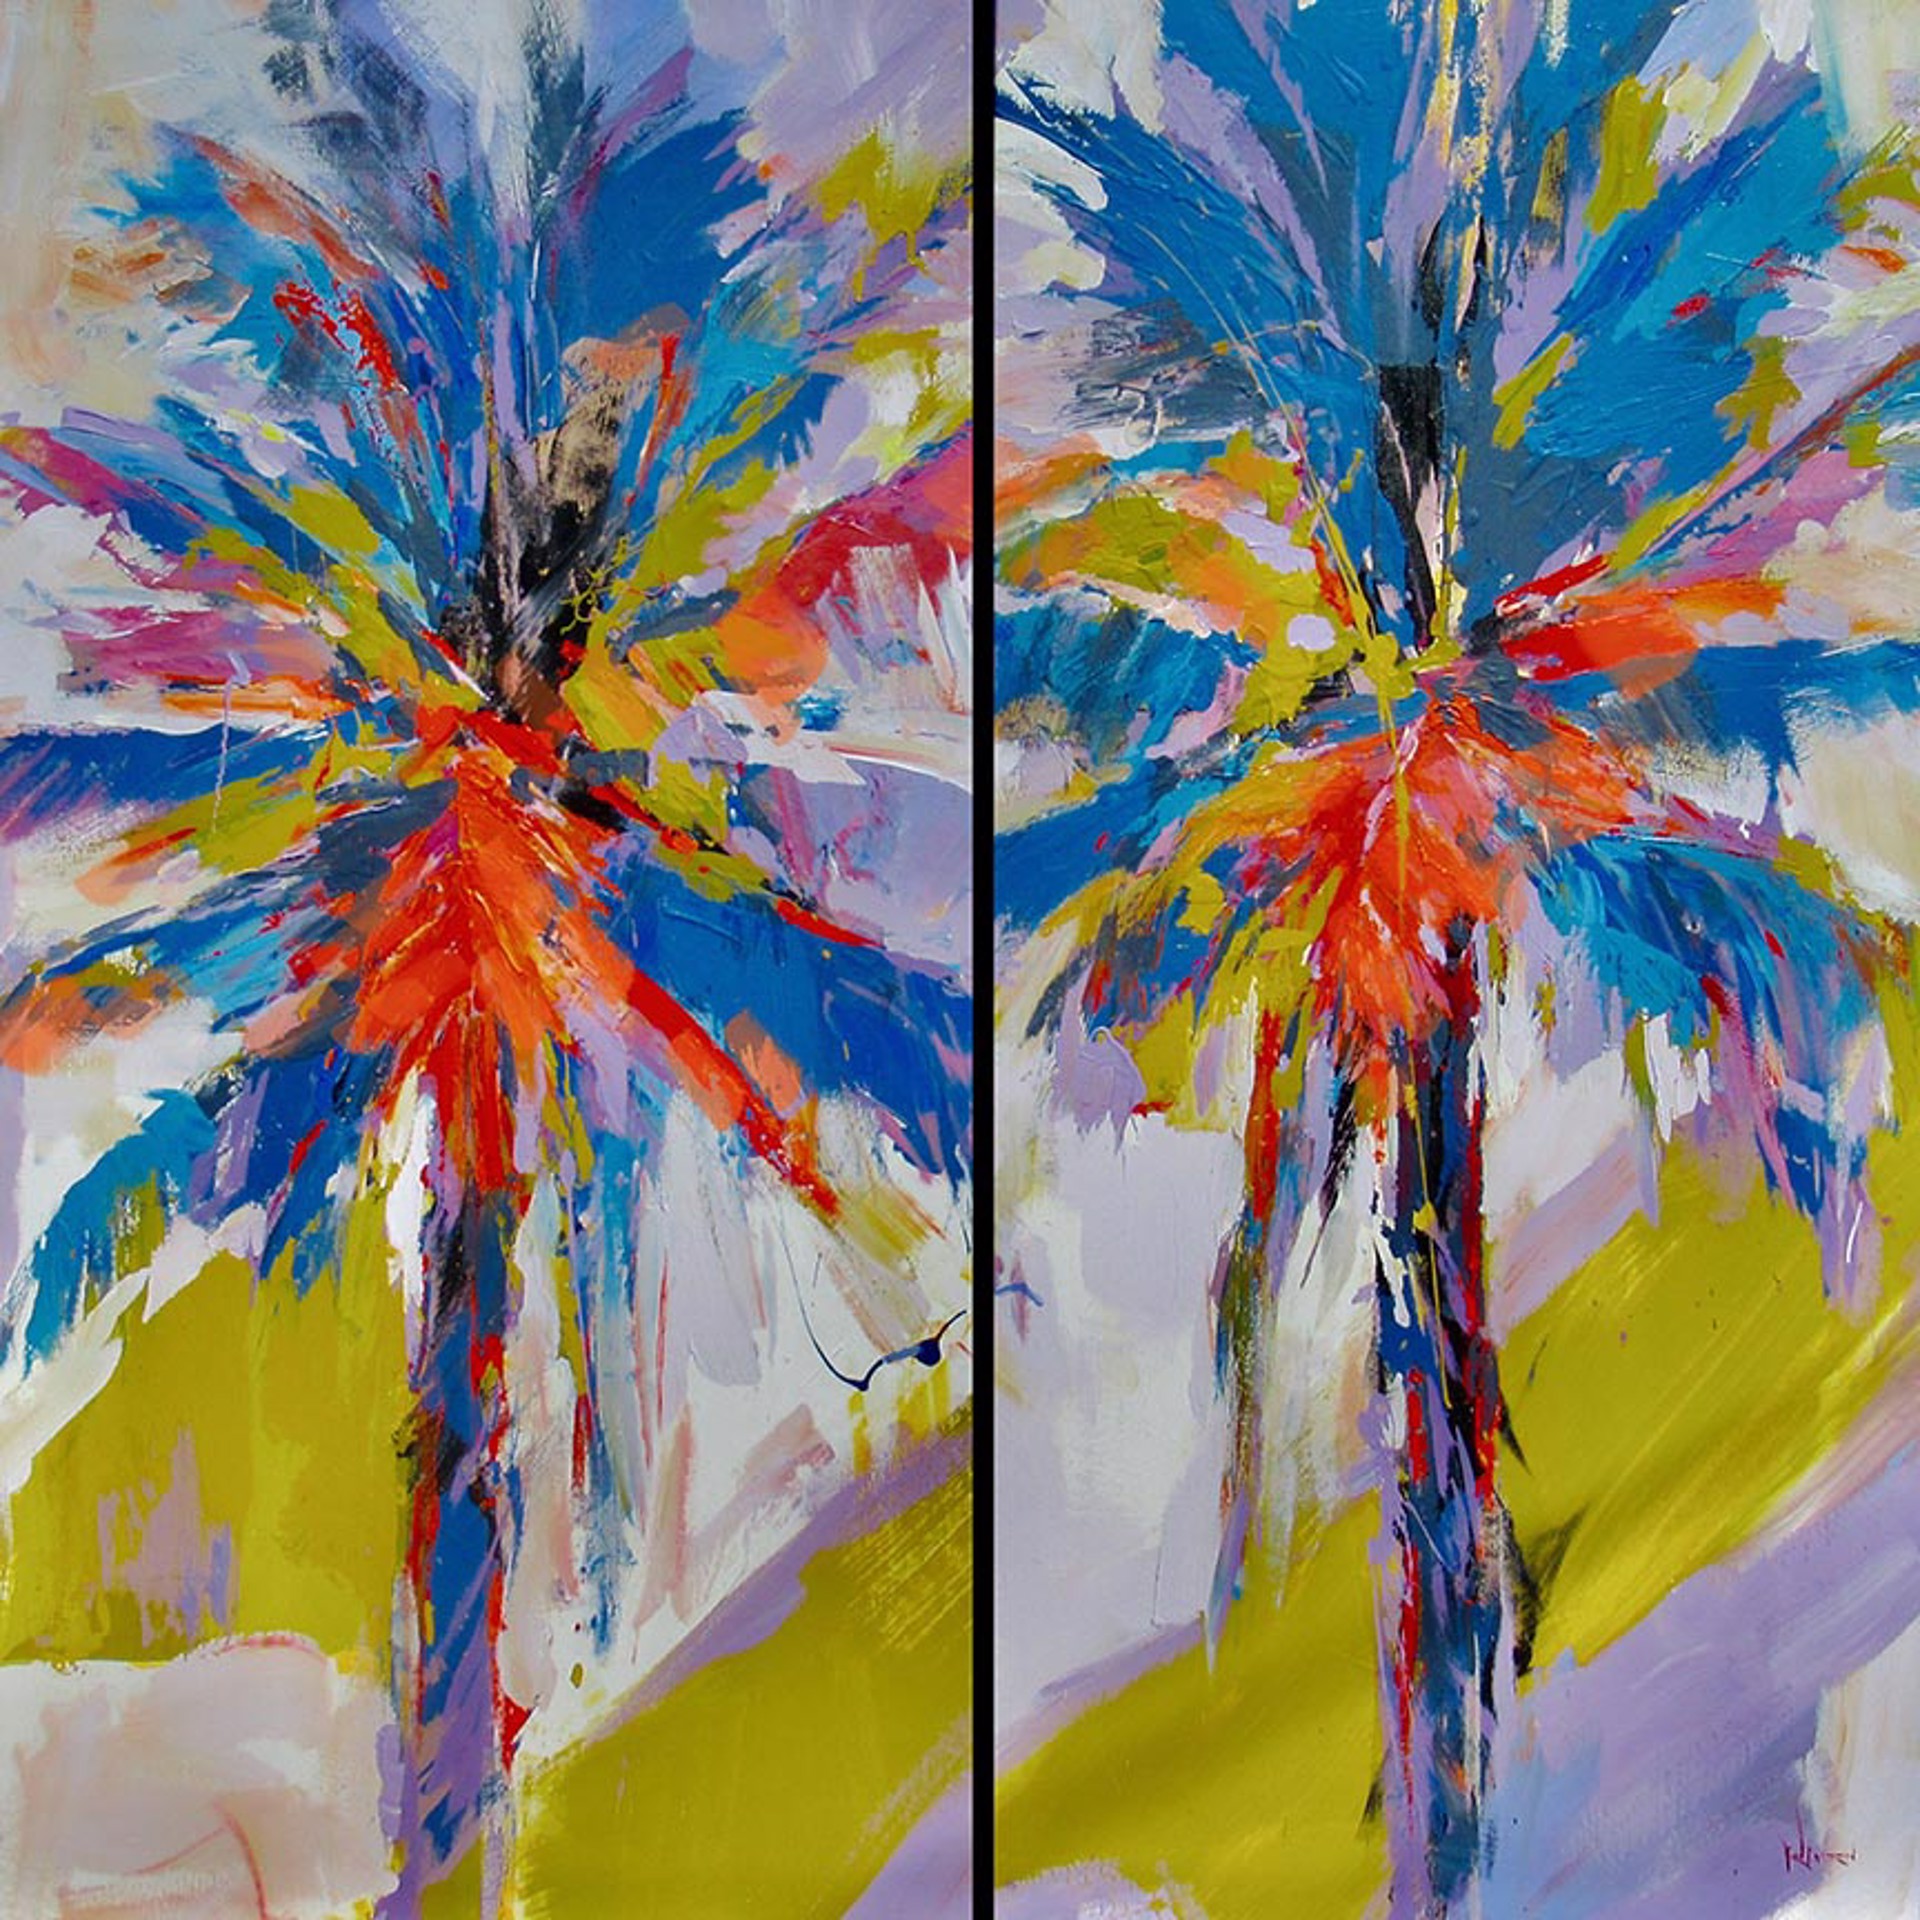 Cameron - Palm Tree Ideas by Rod Cameron